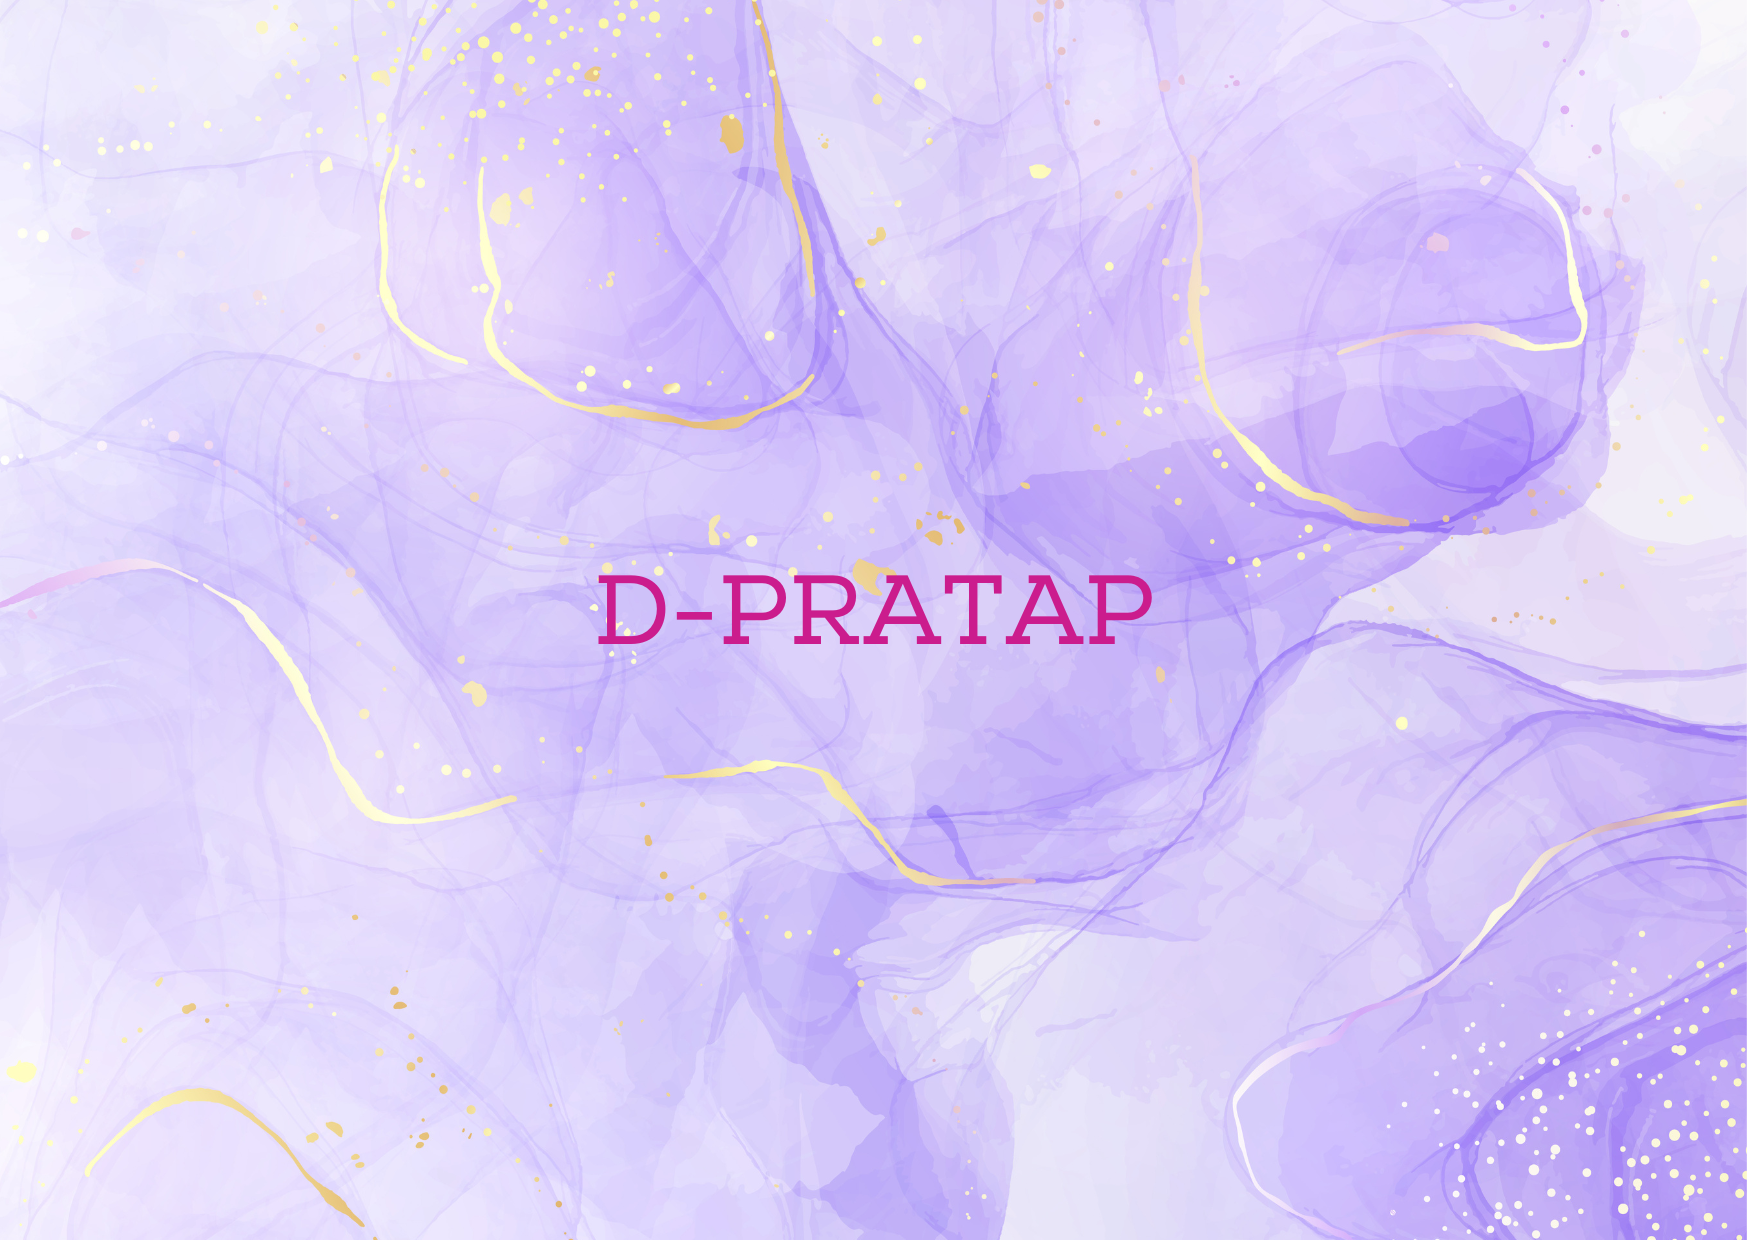 D-PRATAP